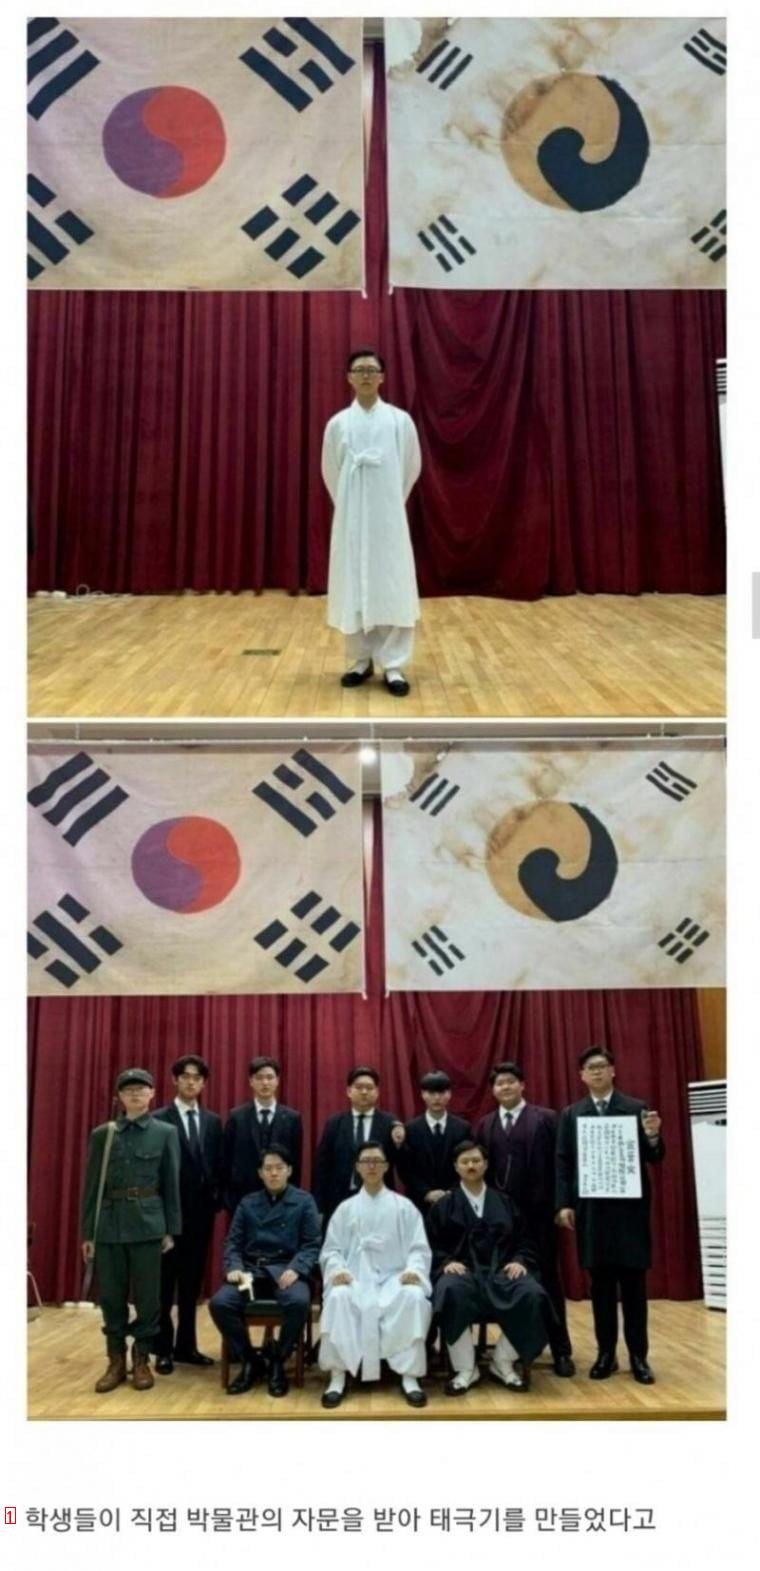 Uijeongbu High School's graduation photo is legendary